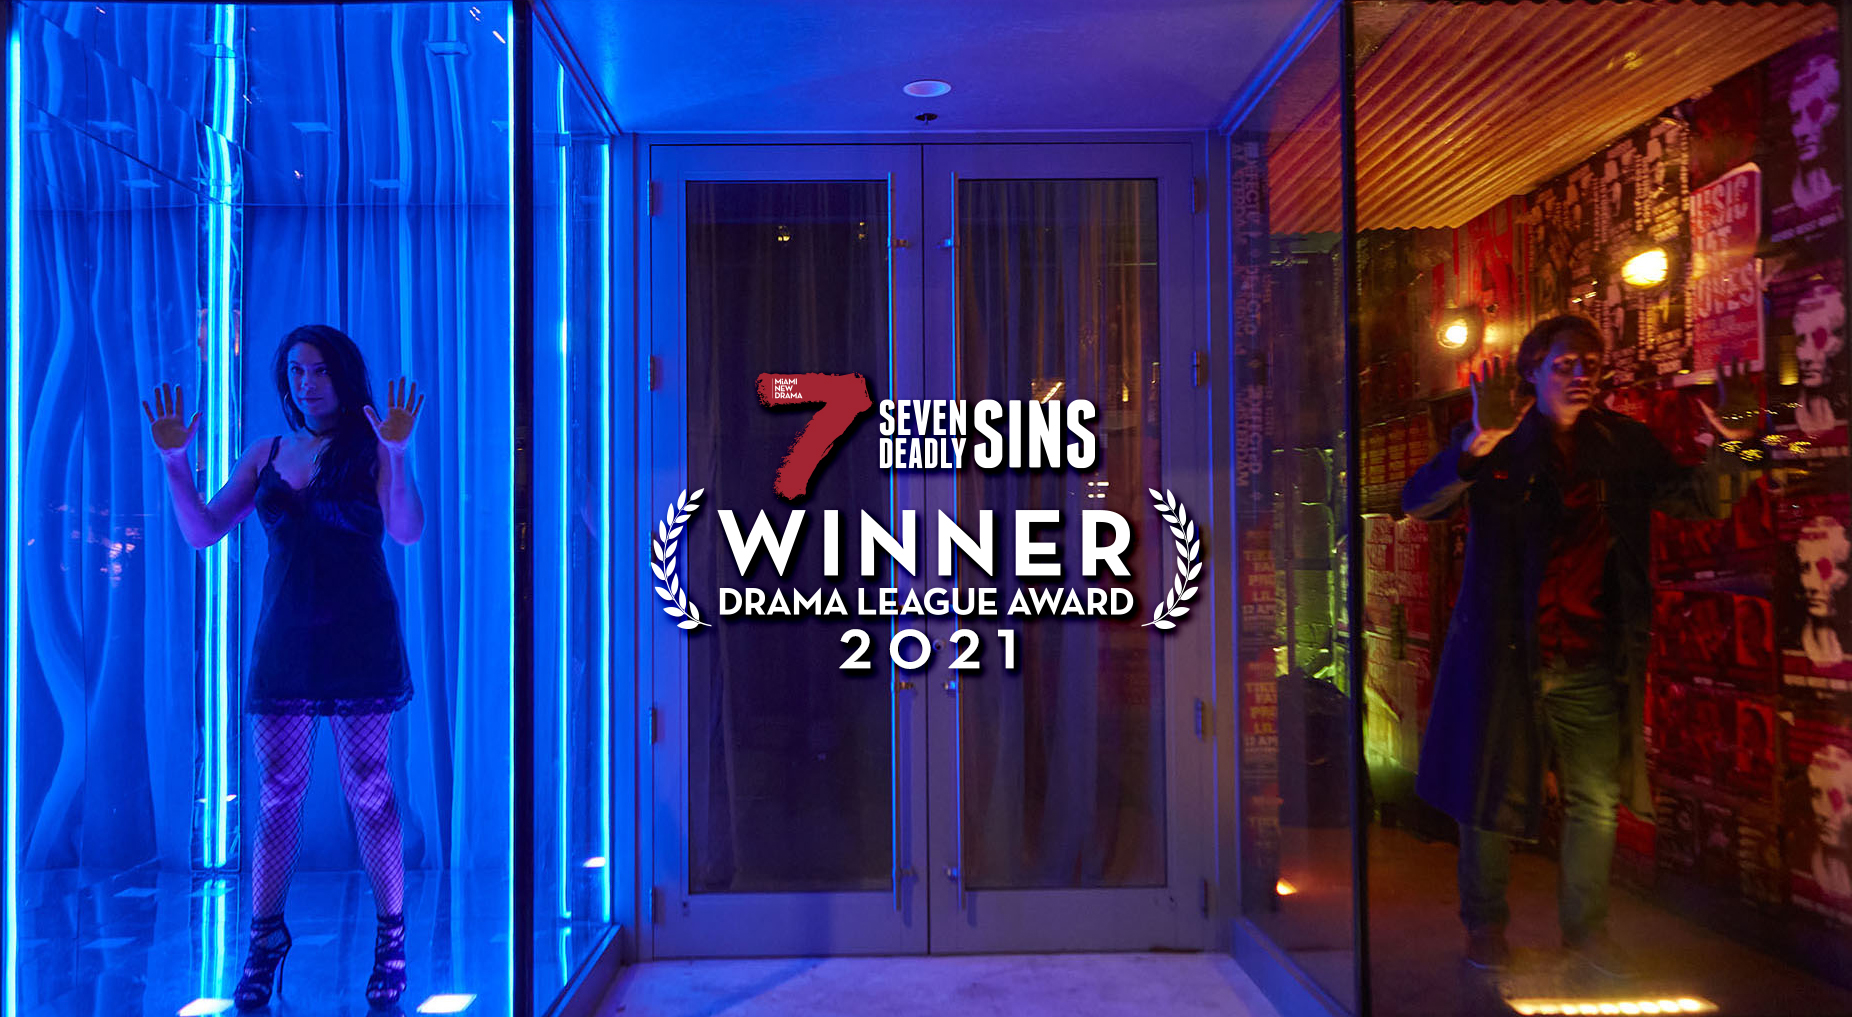 7 Deadly Sins Drama League Award